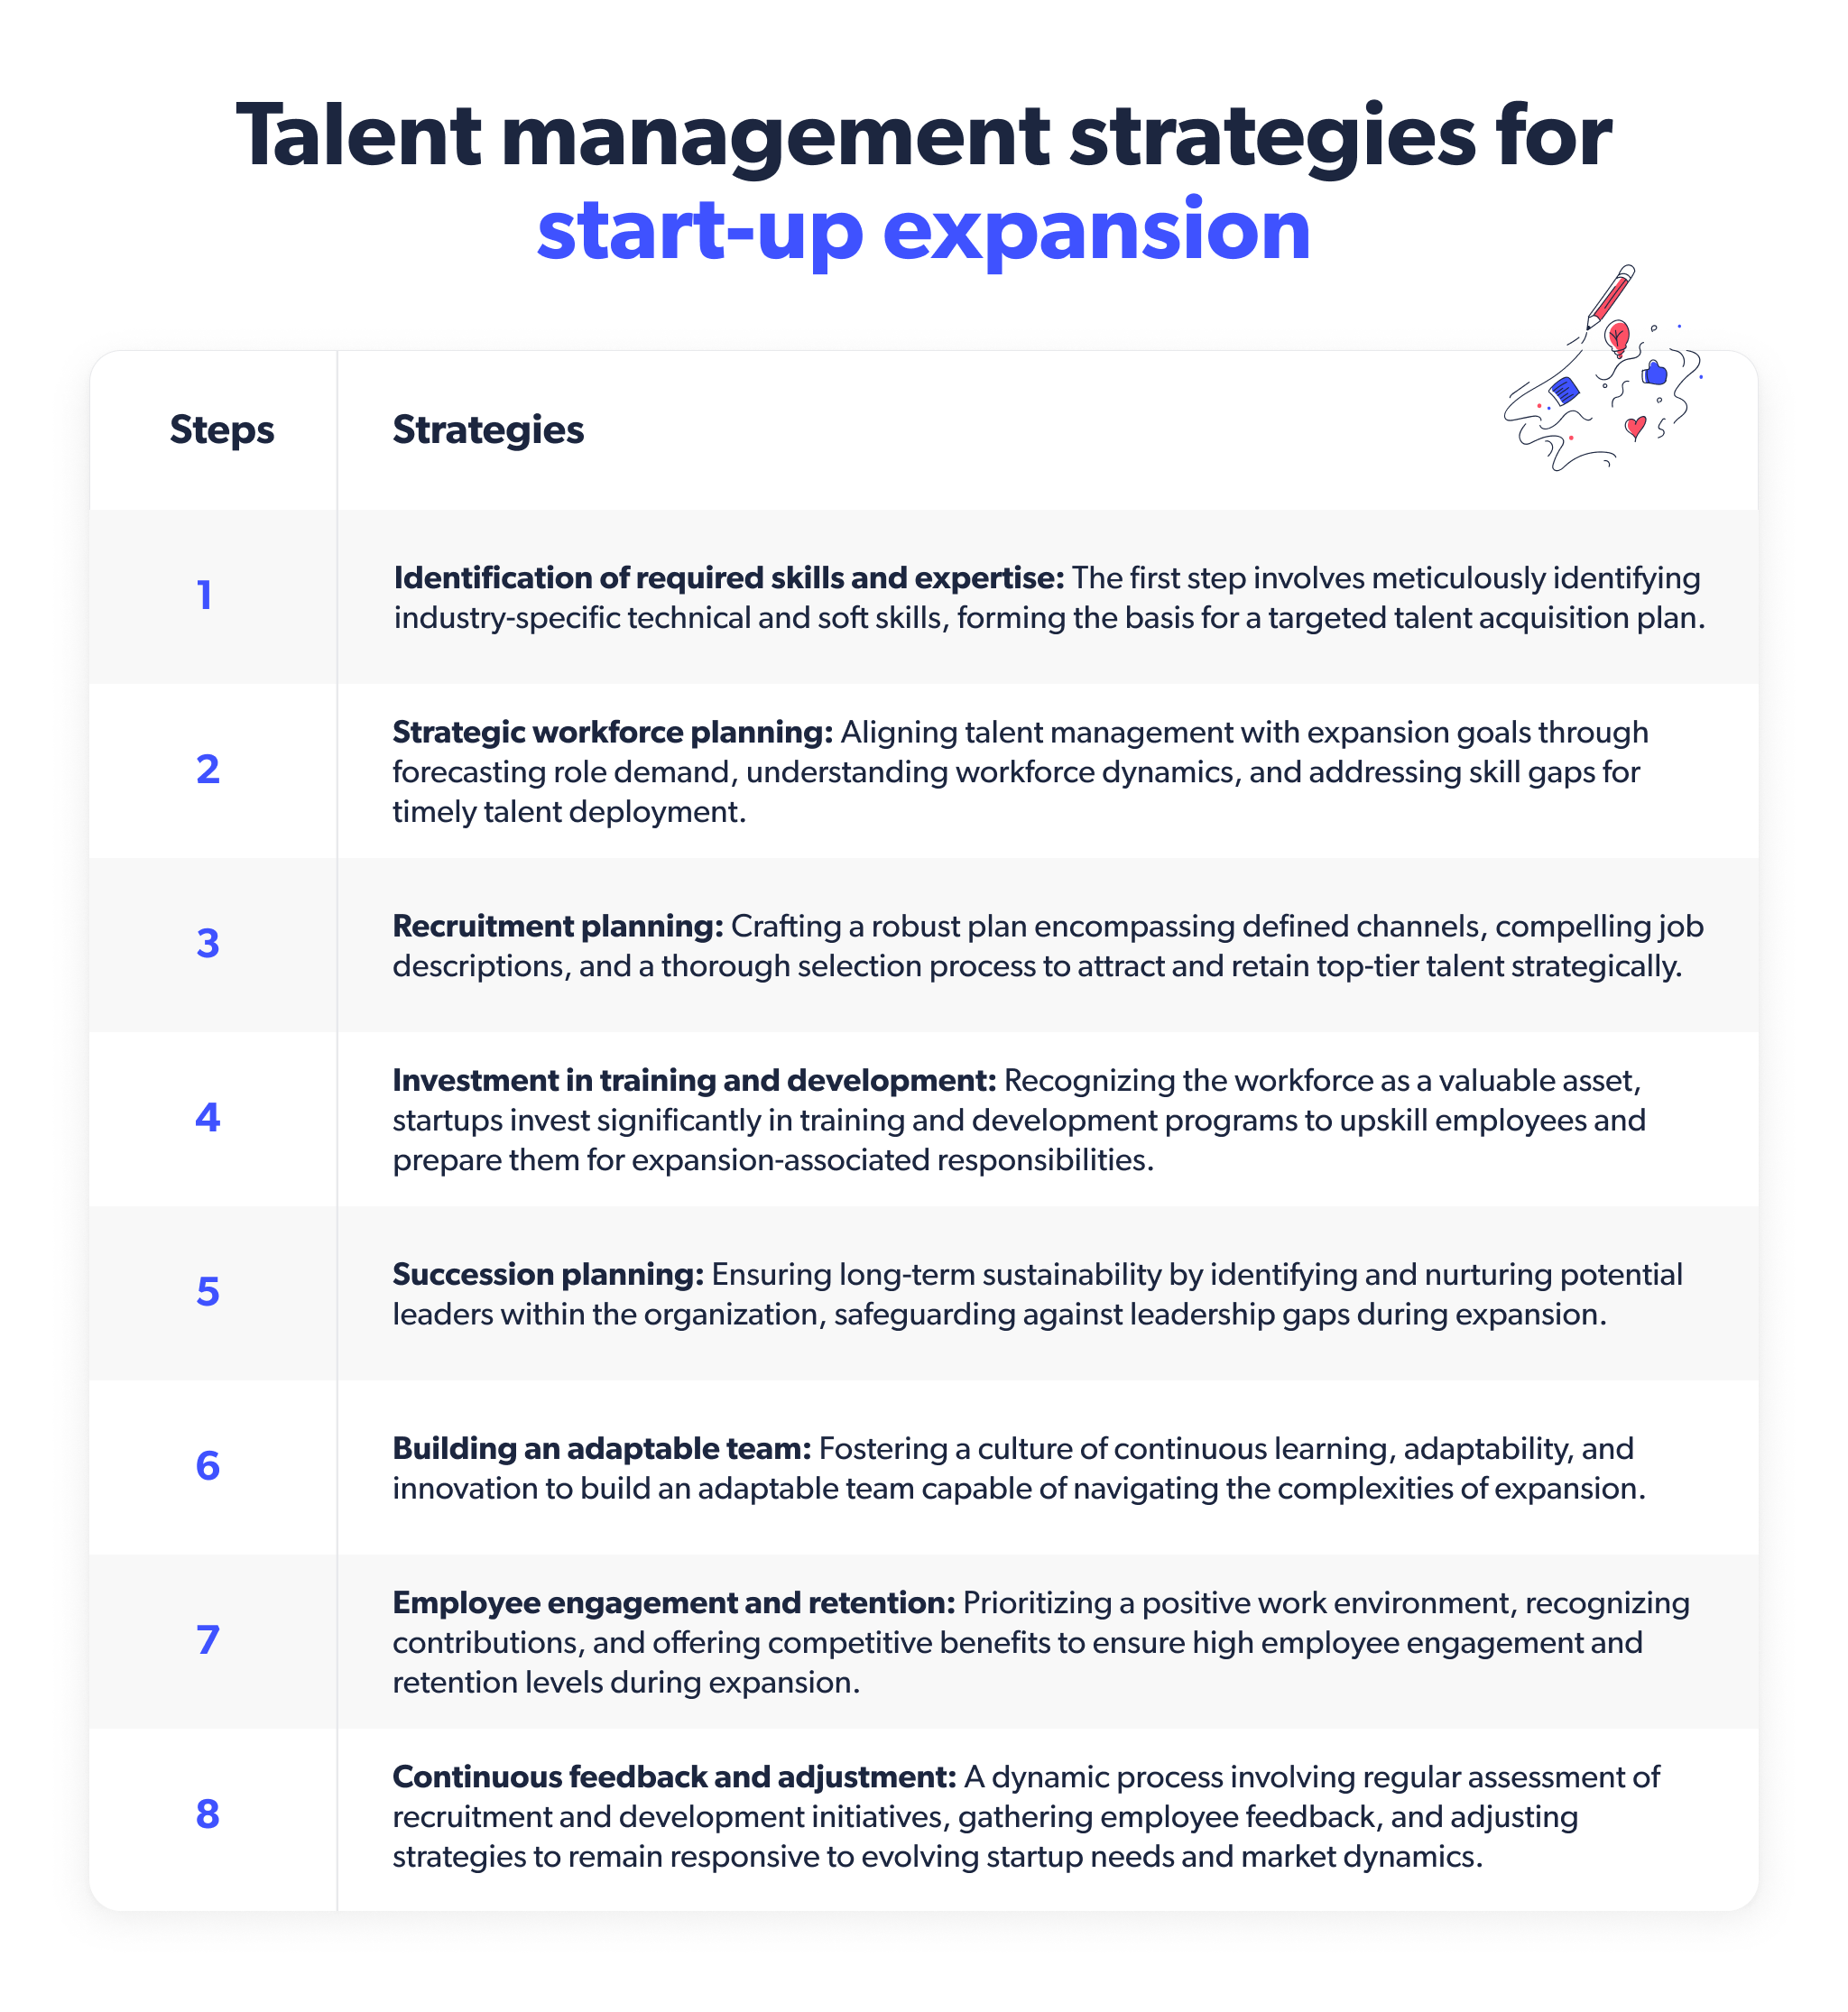 Talent management strategies for start-up expansion